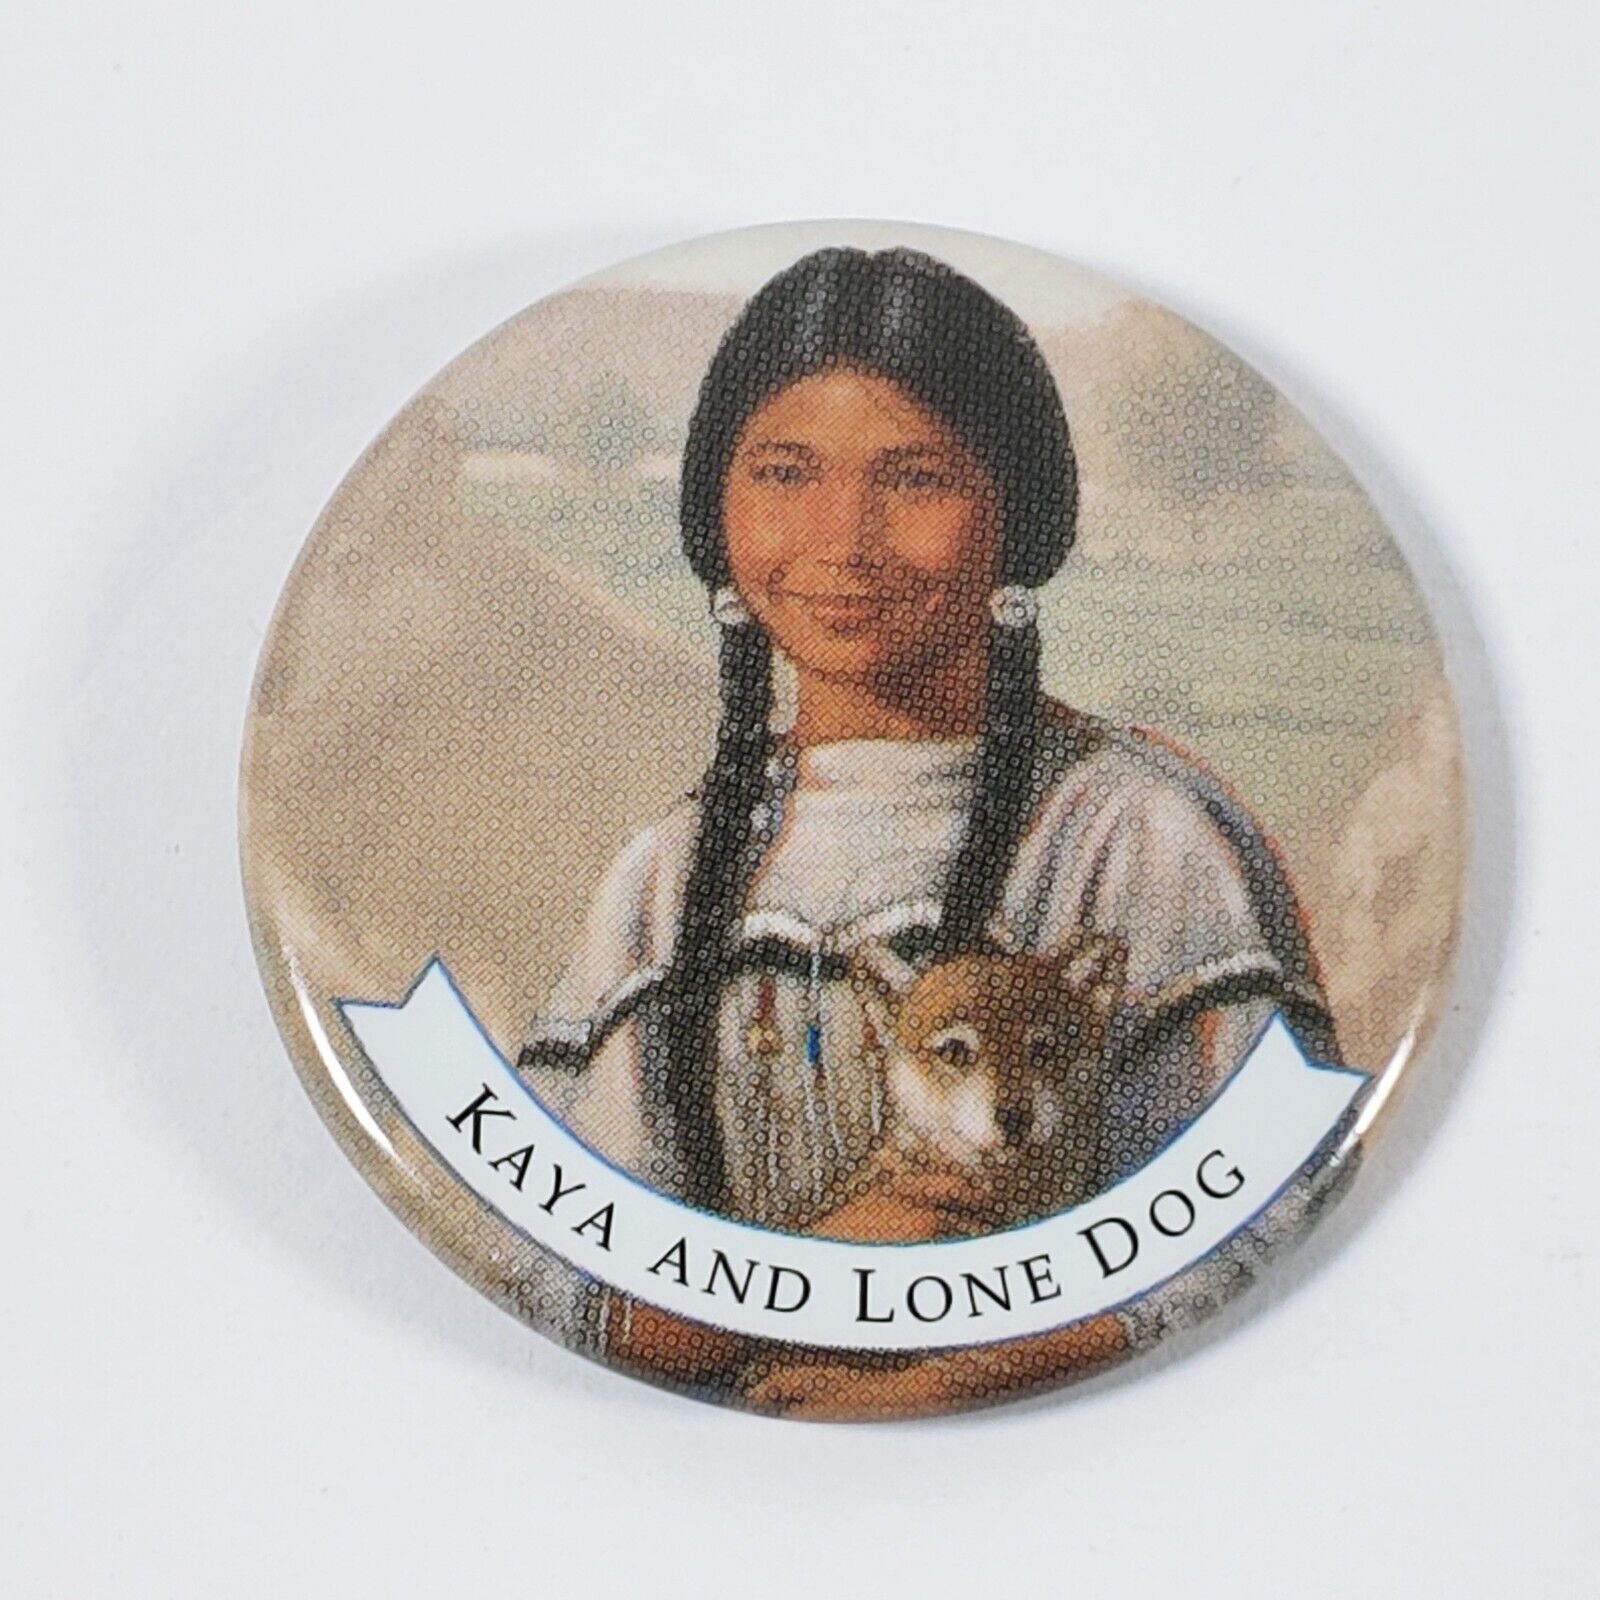 2002 Pleasant Co American Girl Pinback Button Kaya And Lone Dog